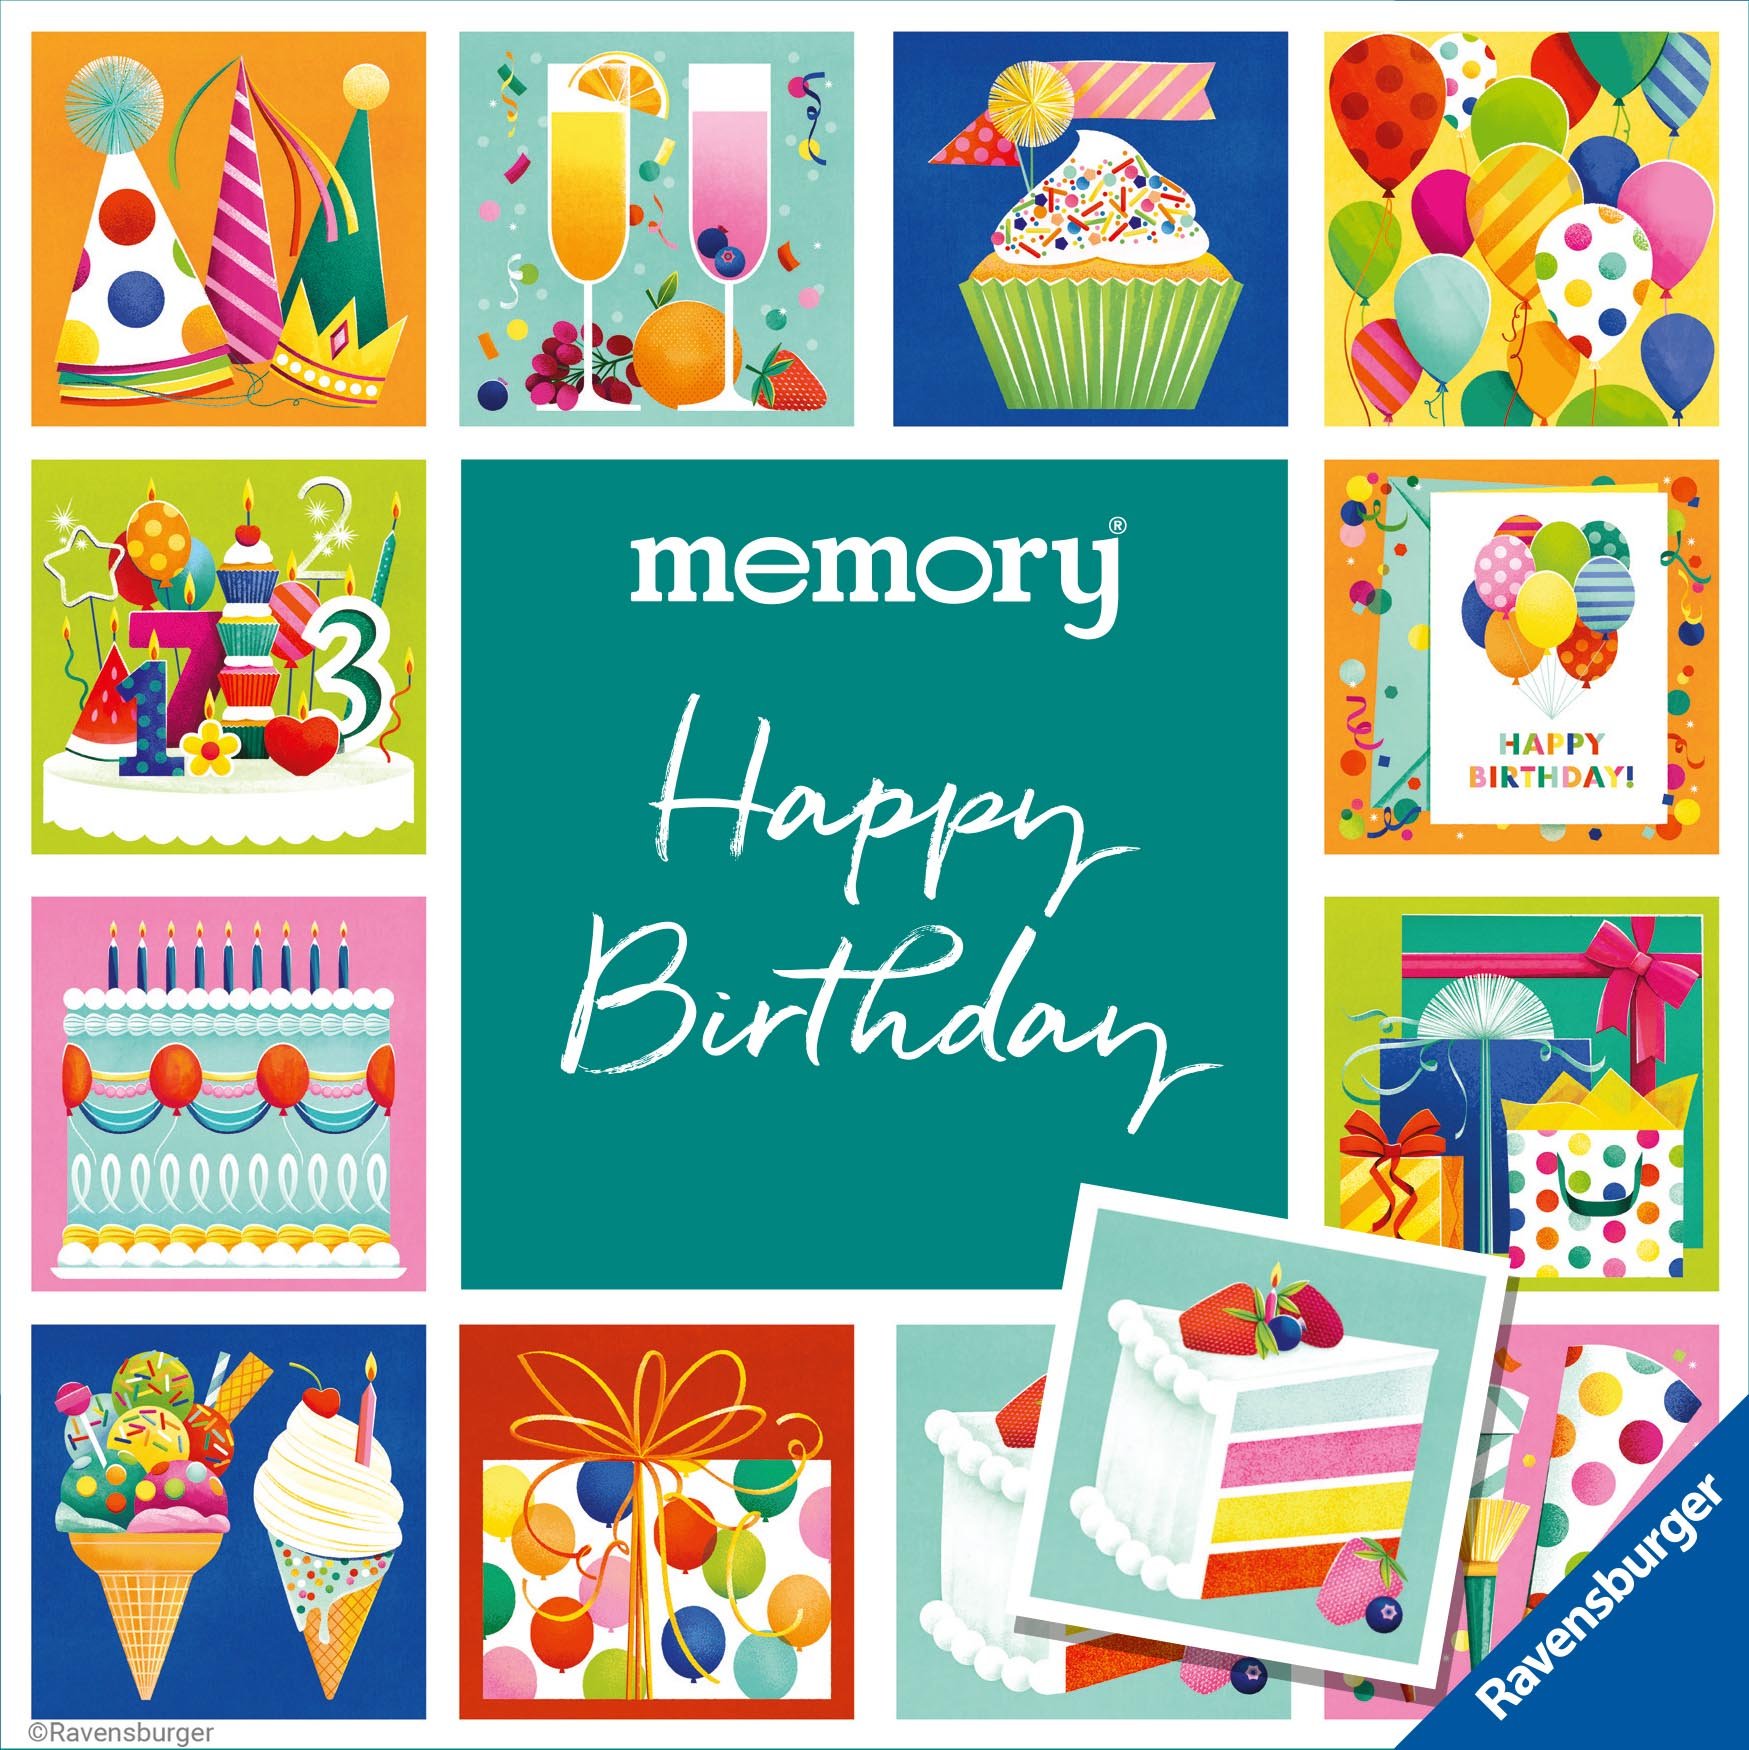 MemoryMoments_Birthday_2.jpg